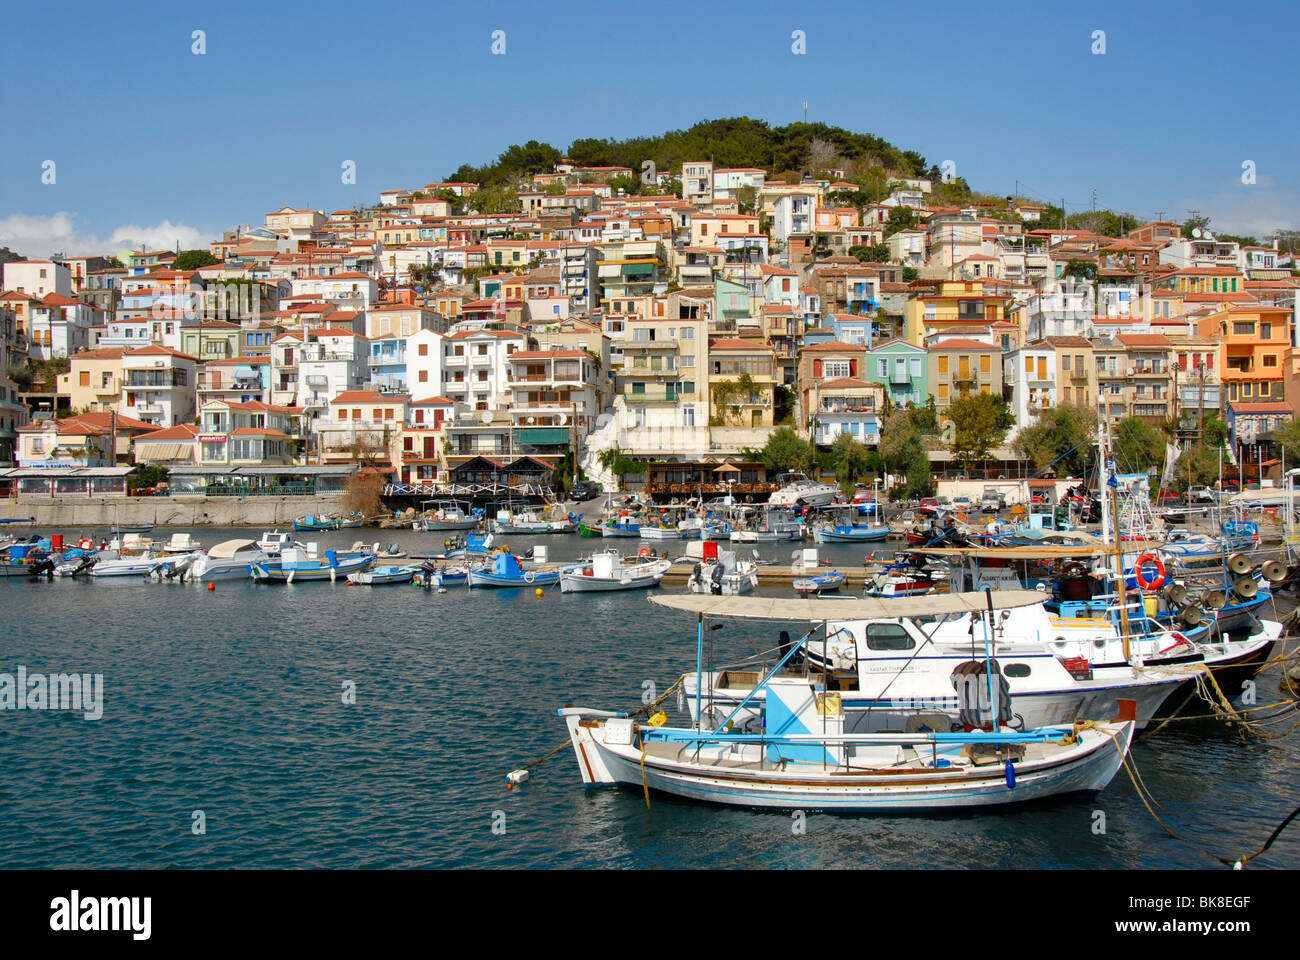 City on the harbour with fishing boats, Plomari, Lesbos island, Aegean Sea, Greece, Europe Stock Photo